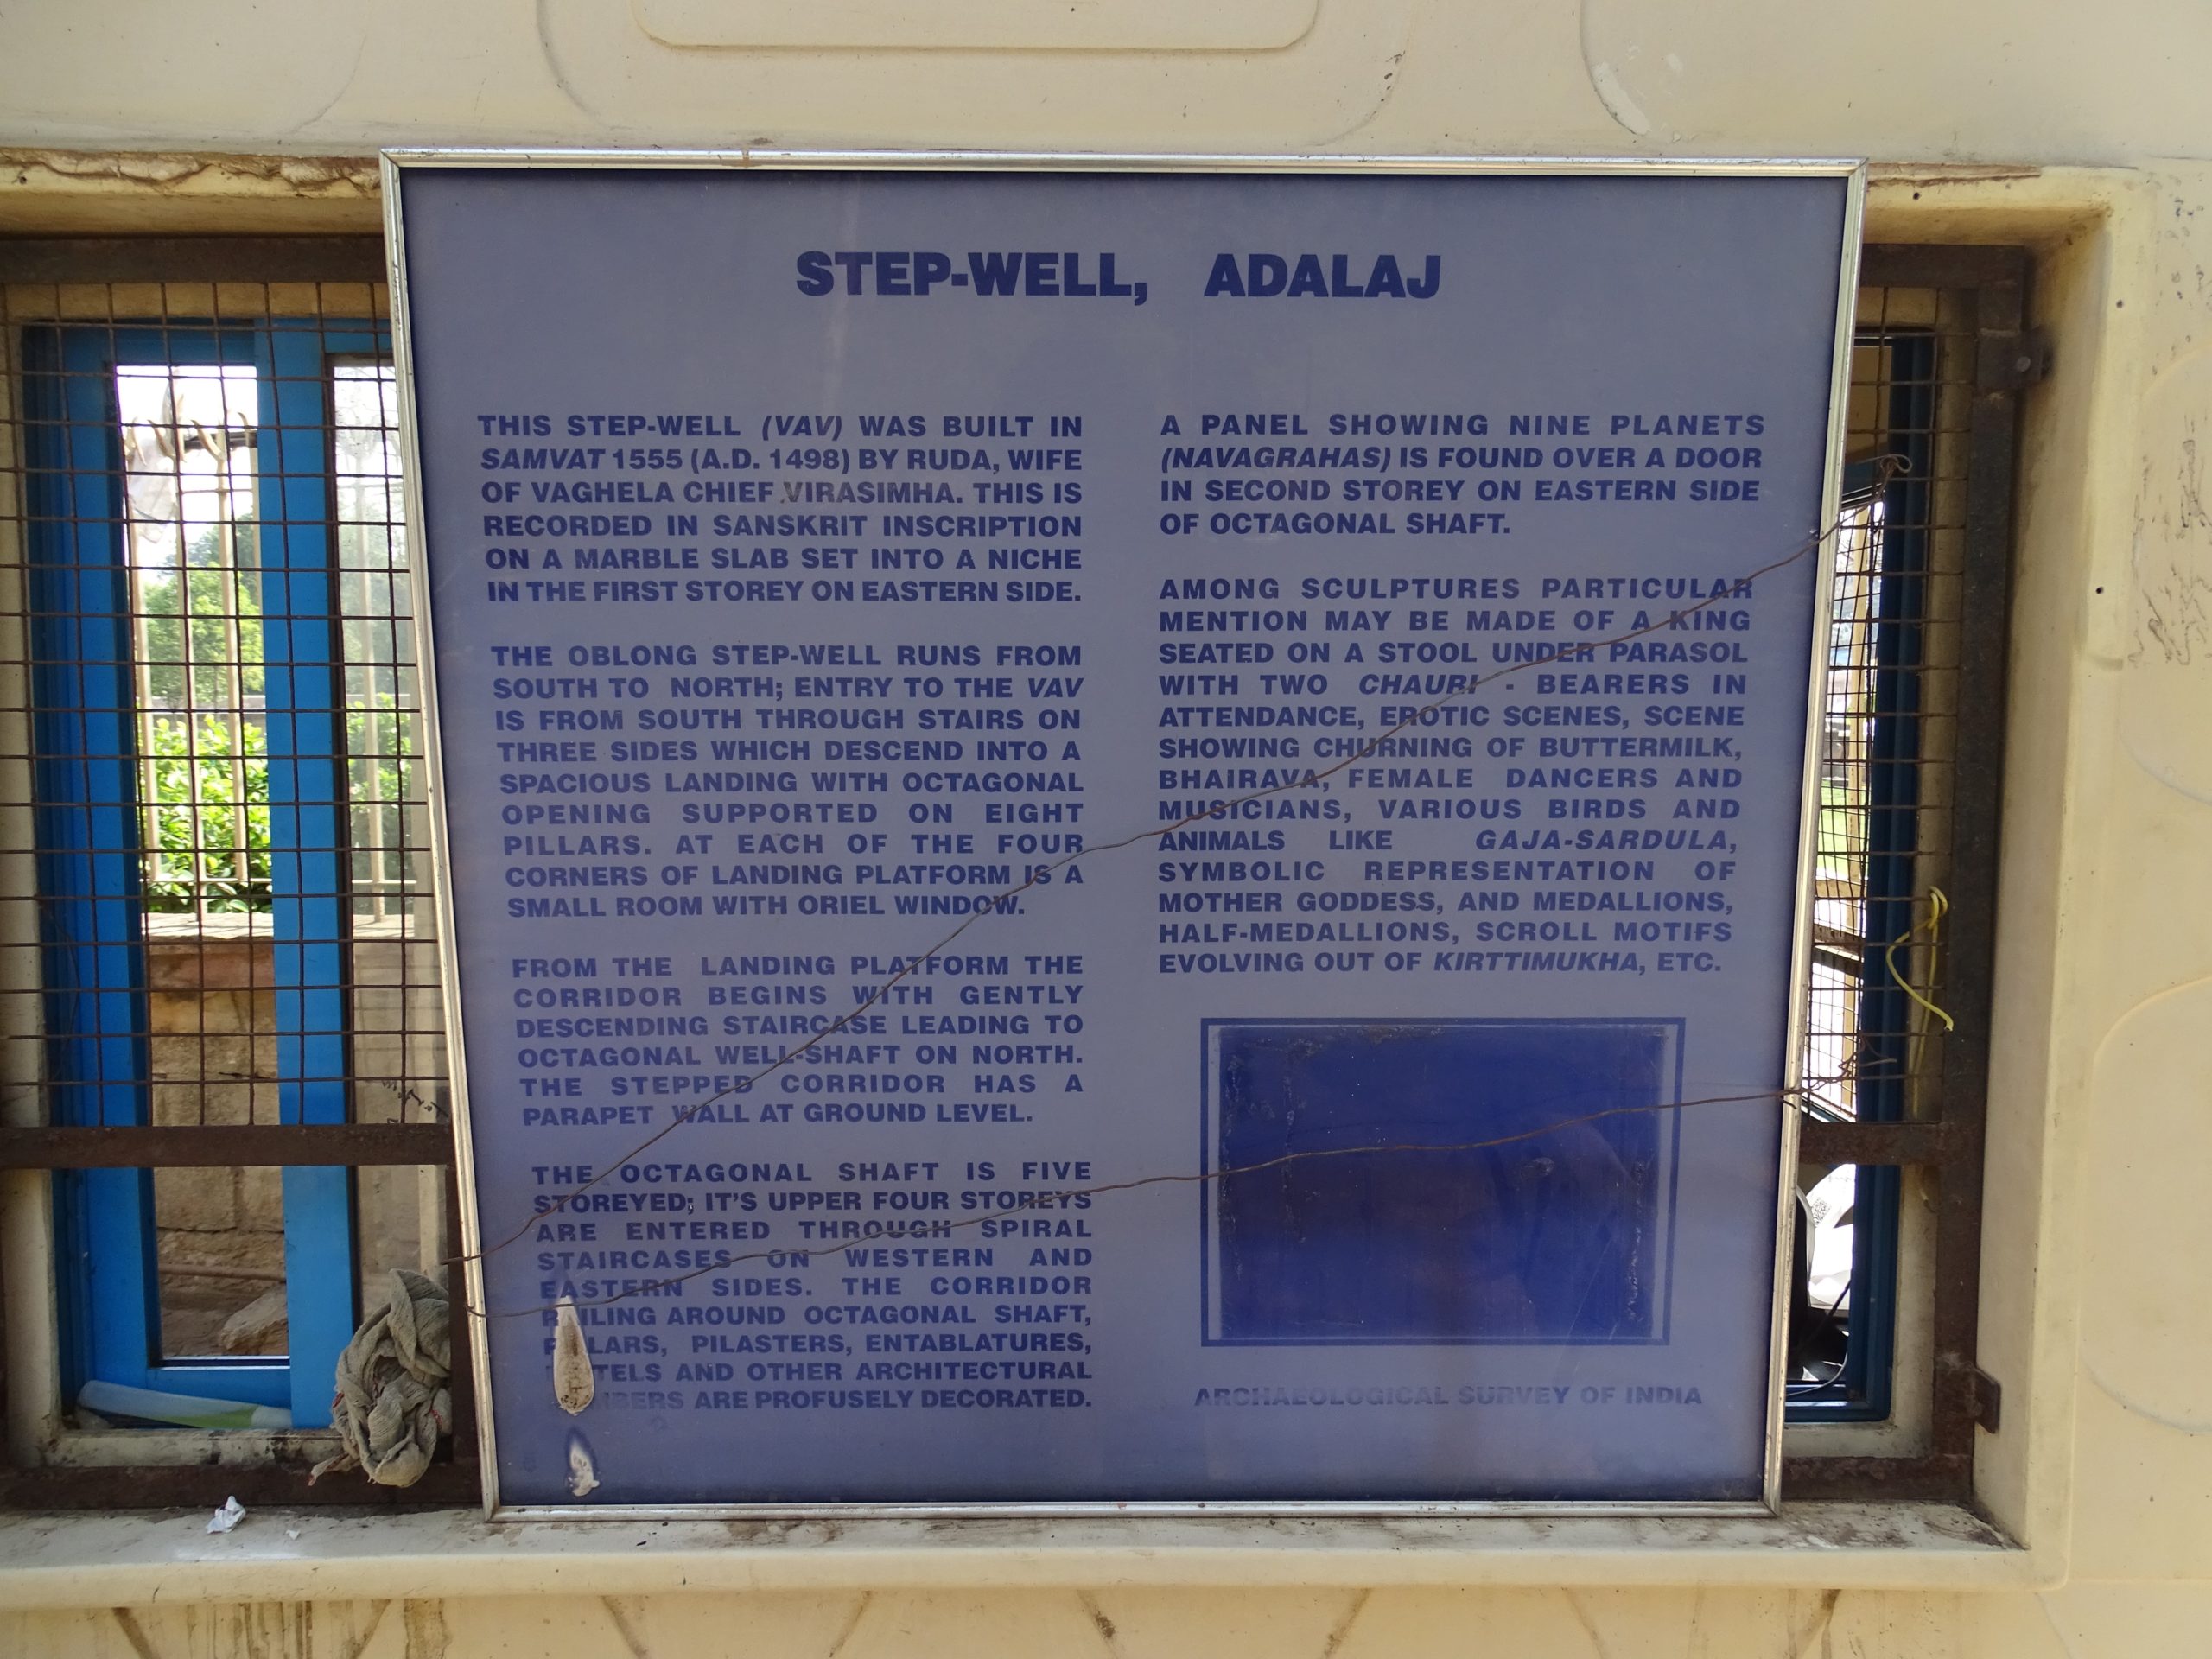 History of Step-Well, Adalaj – Built by Ruda – Wife of Vaghela Chief Virasimha